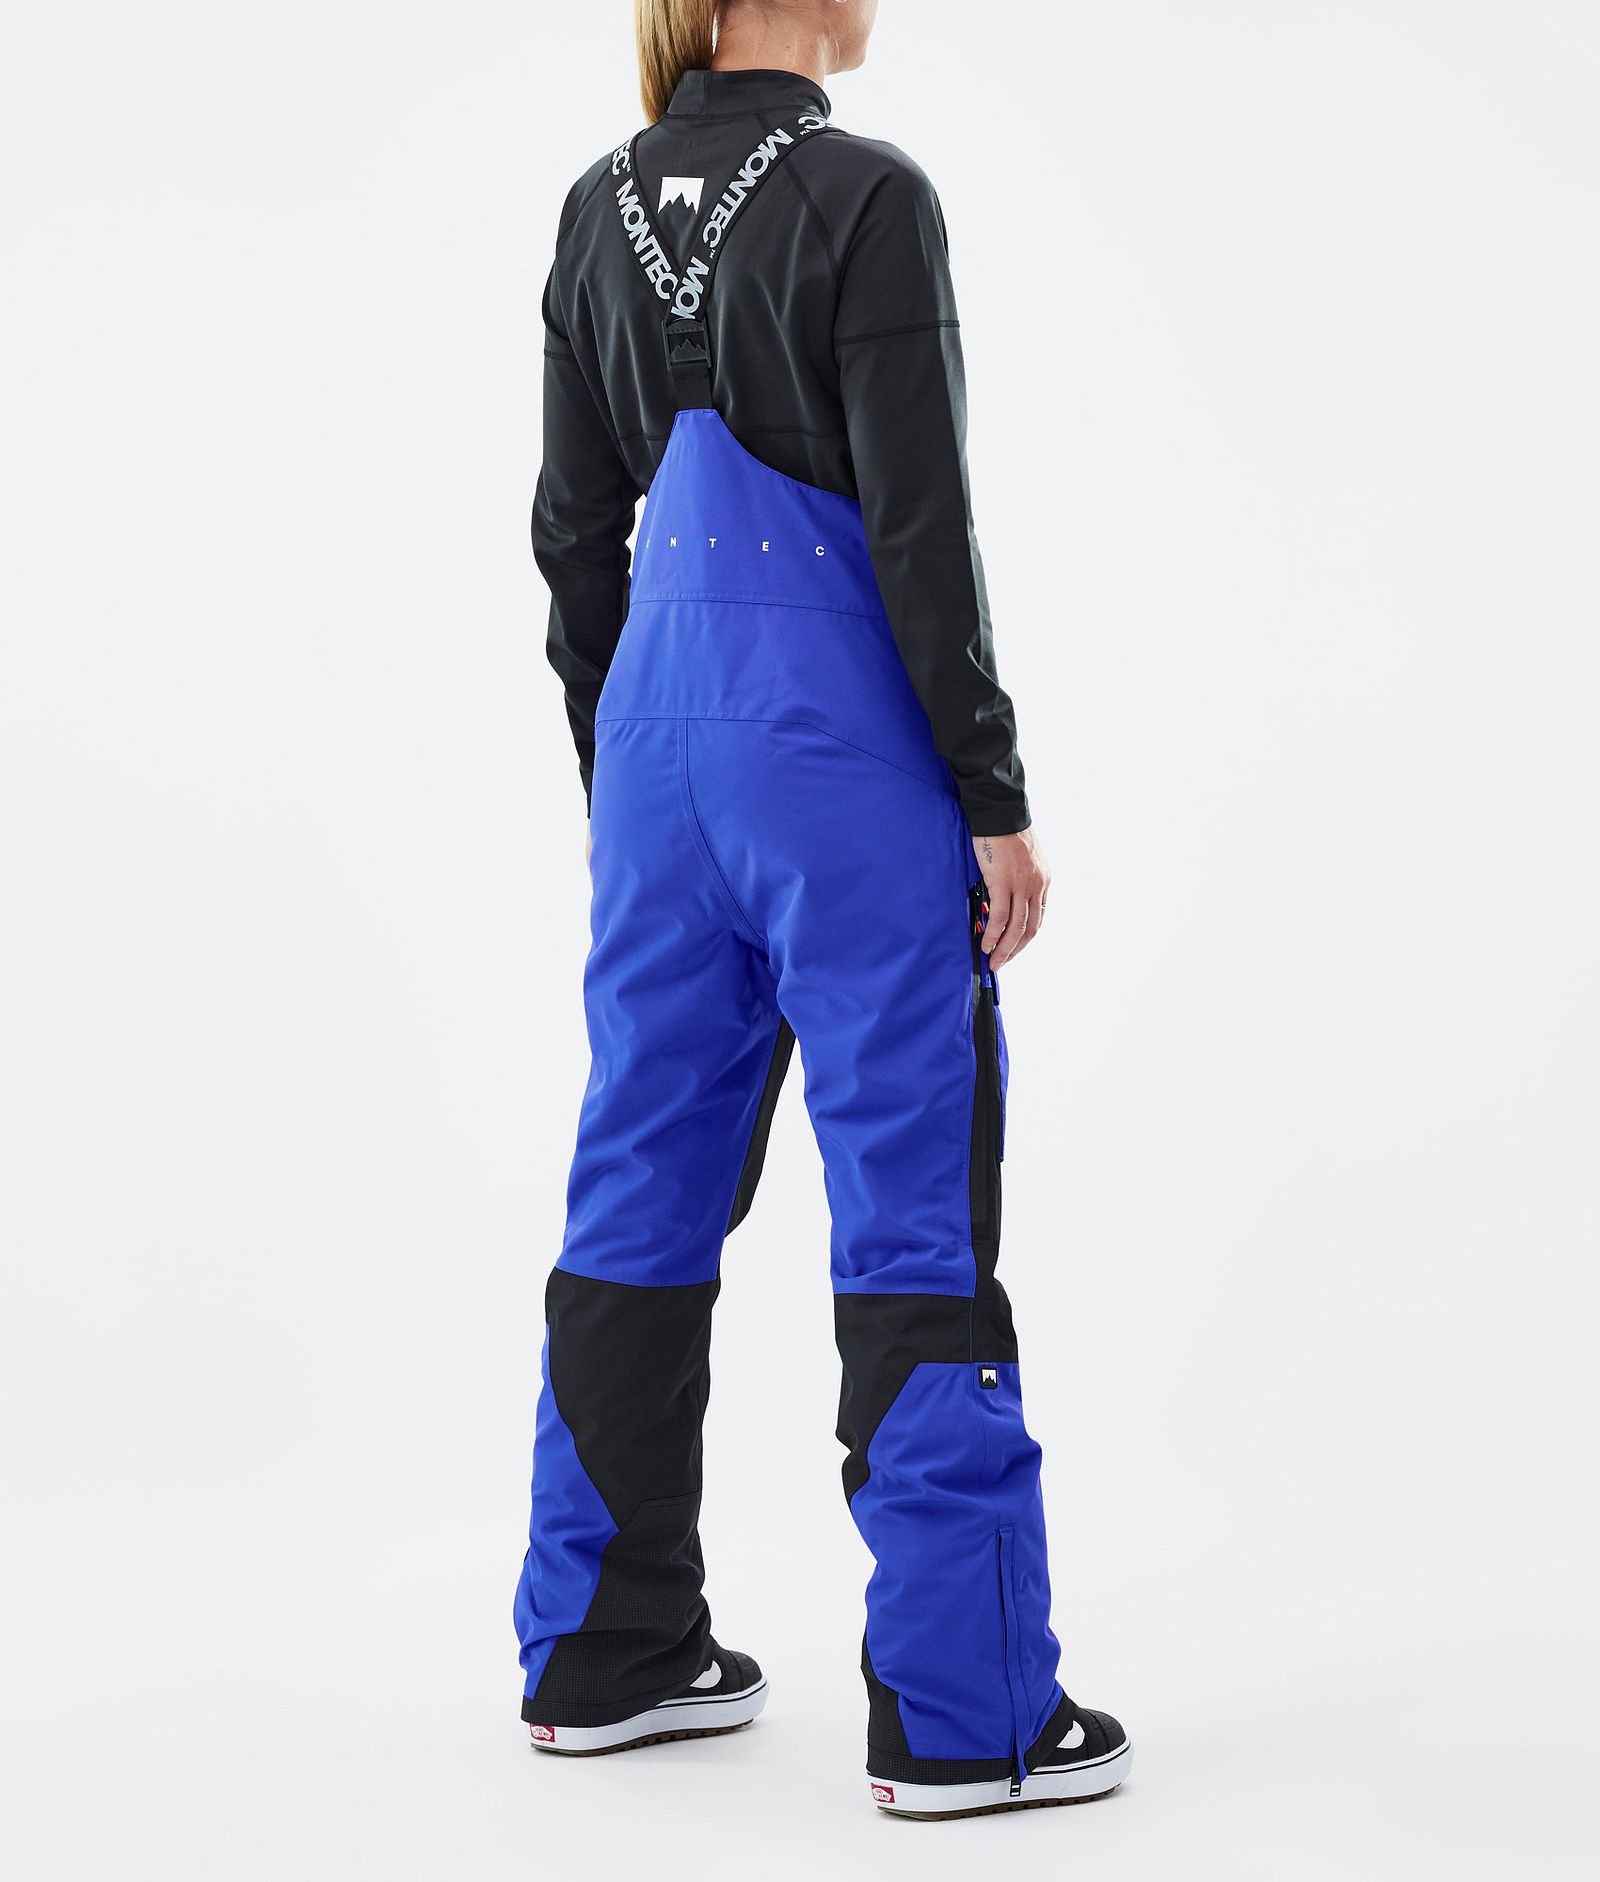 Fawk W Pantaloni Snowboard Donna Cobalt Blue/Black